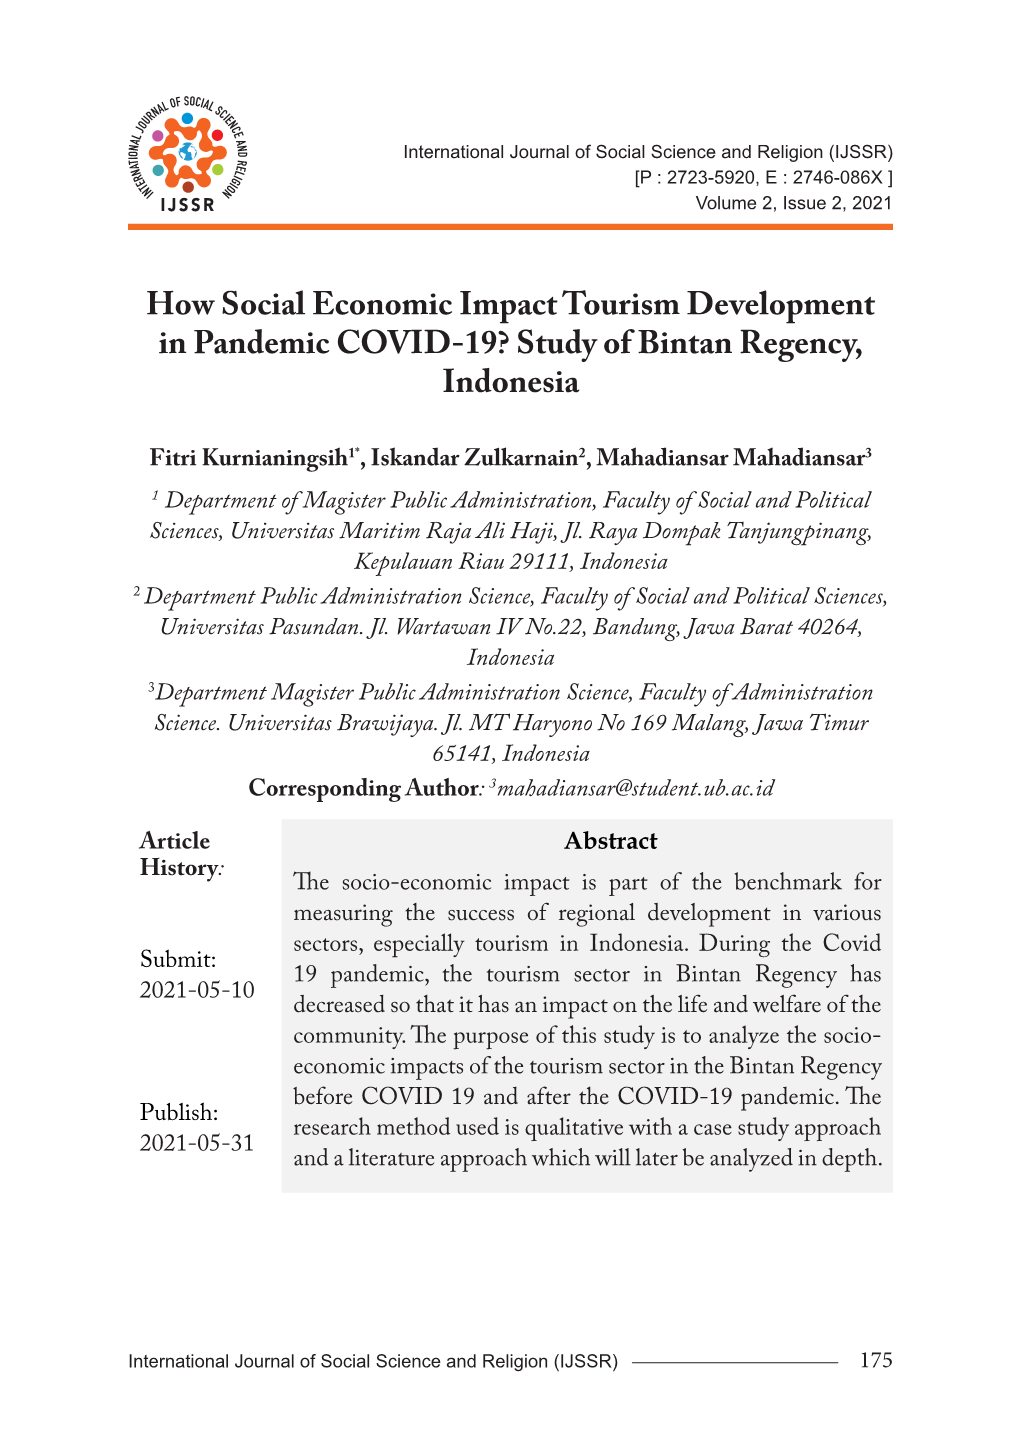 How Social Economic Impact Tourism Development in Pandemic COVID-19? Study of Bintan Regency, Indonesia